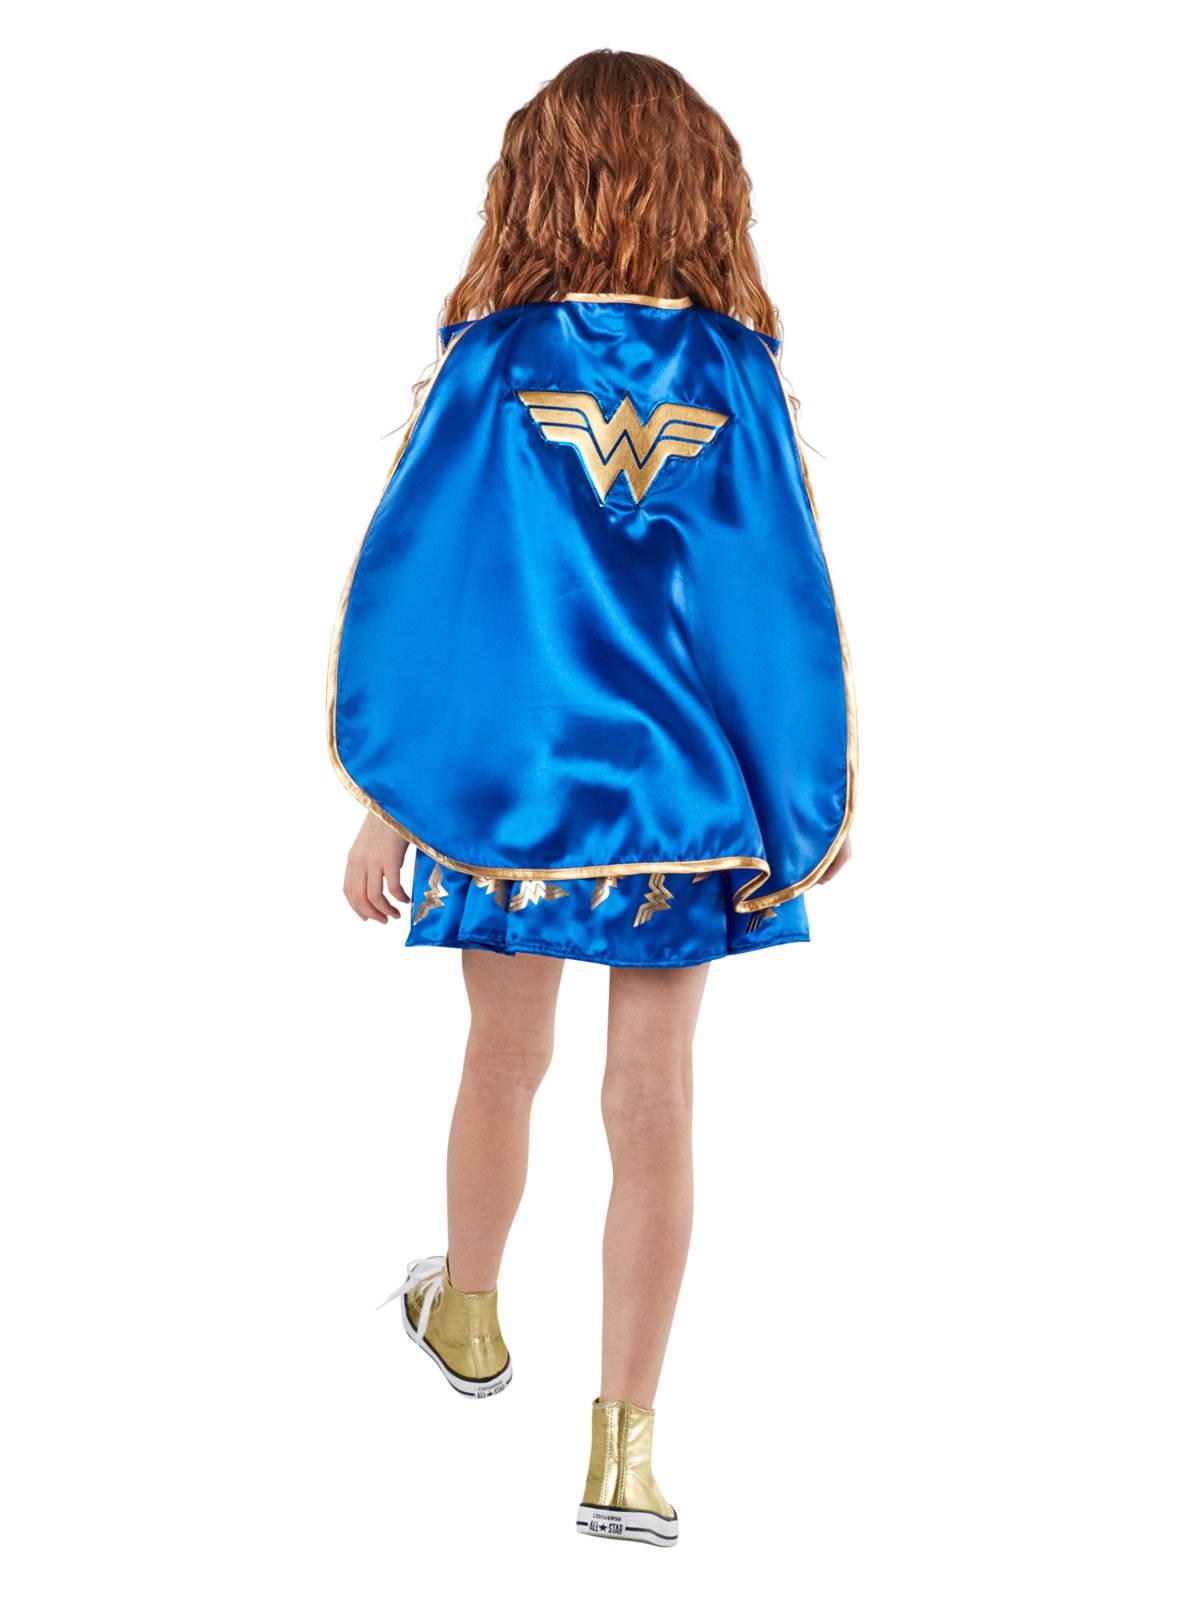 Costume Child Wonder Woman Deluxe 6-8 Years